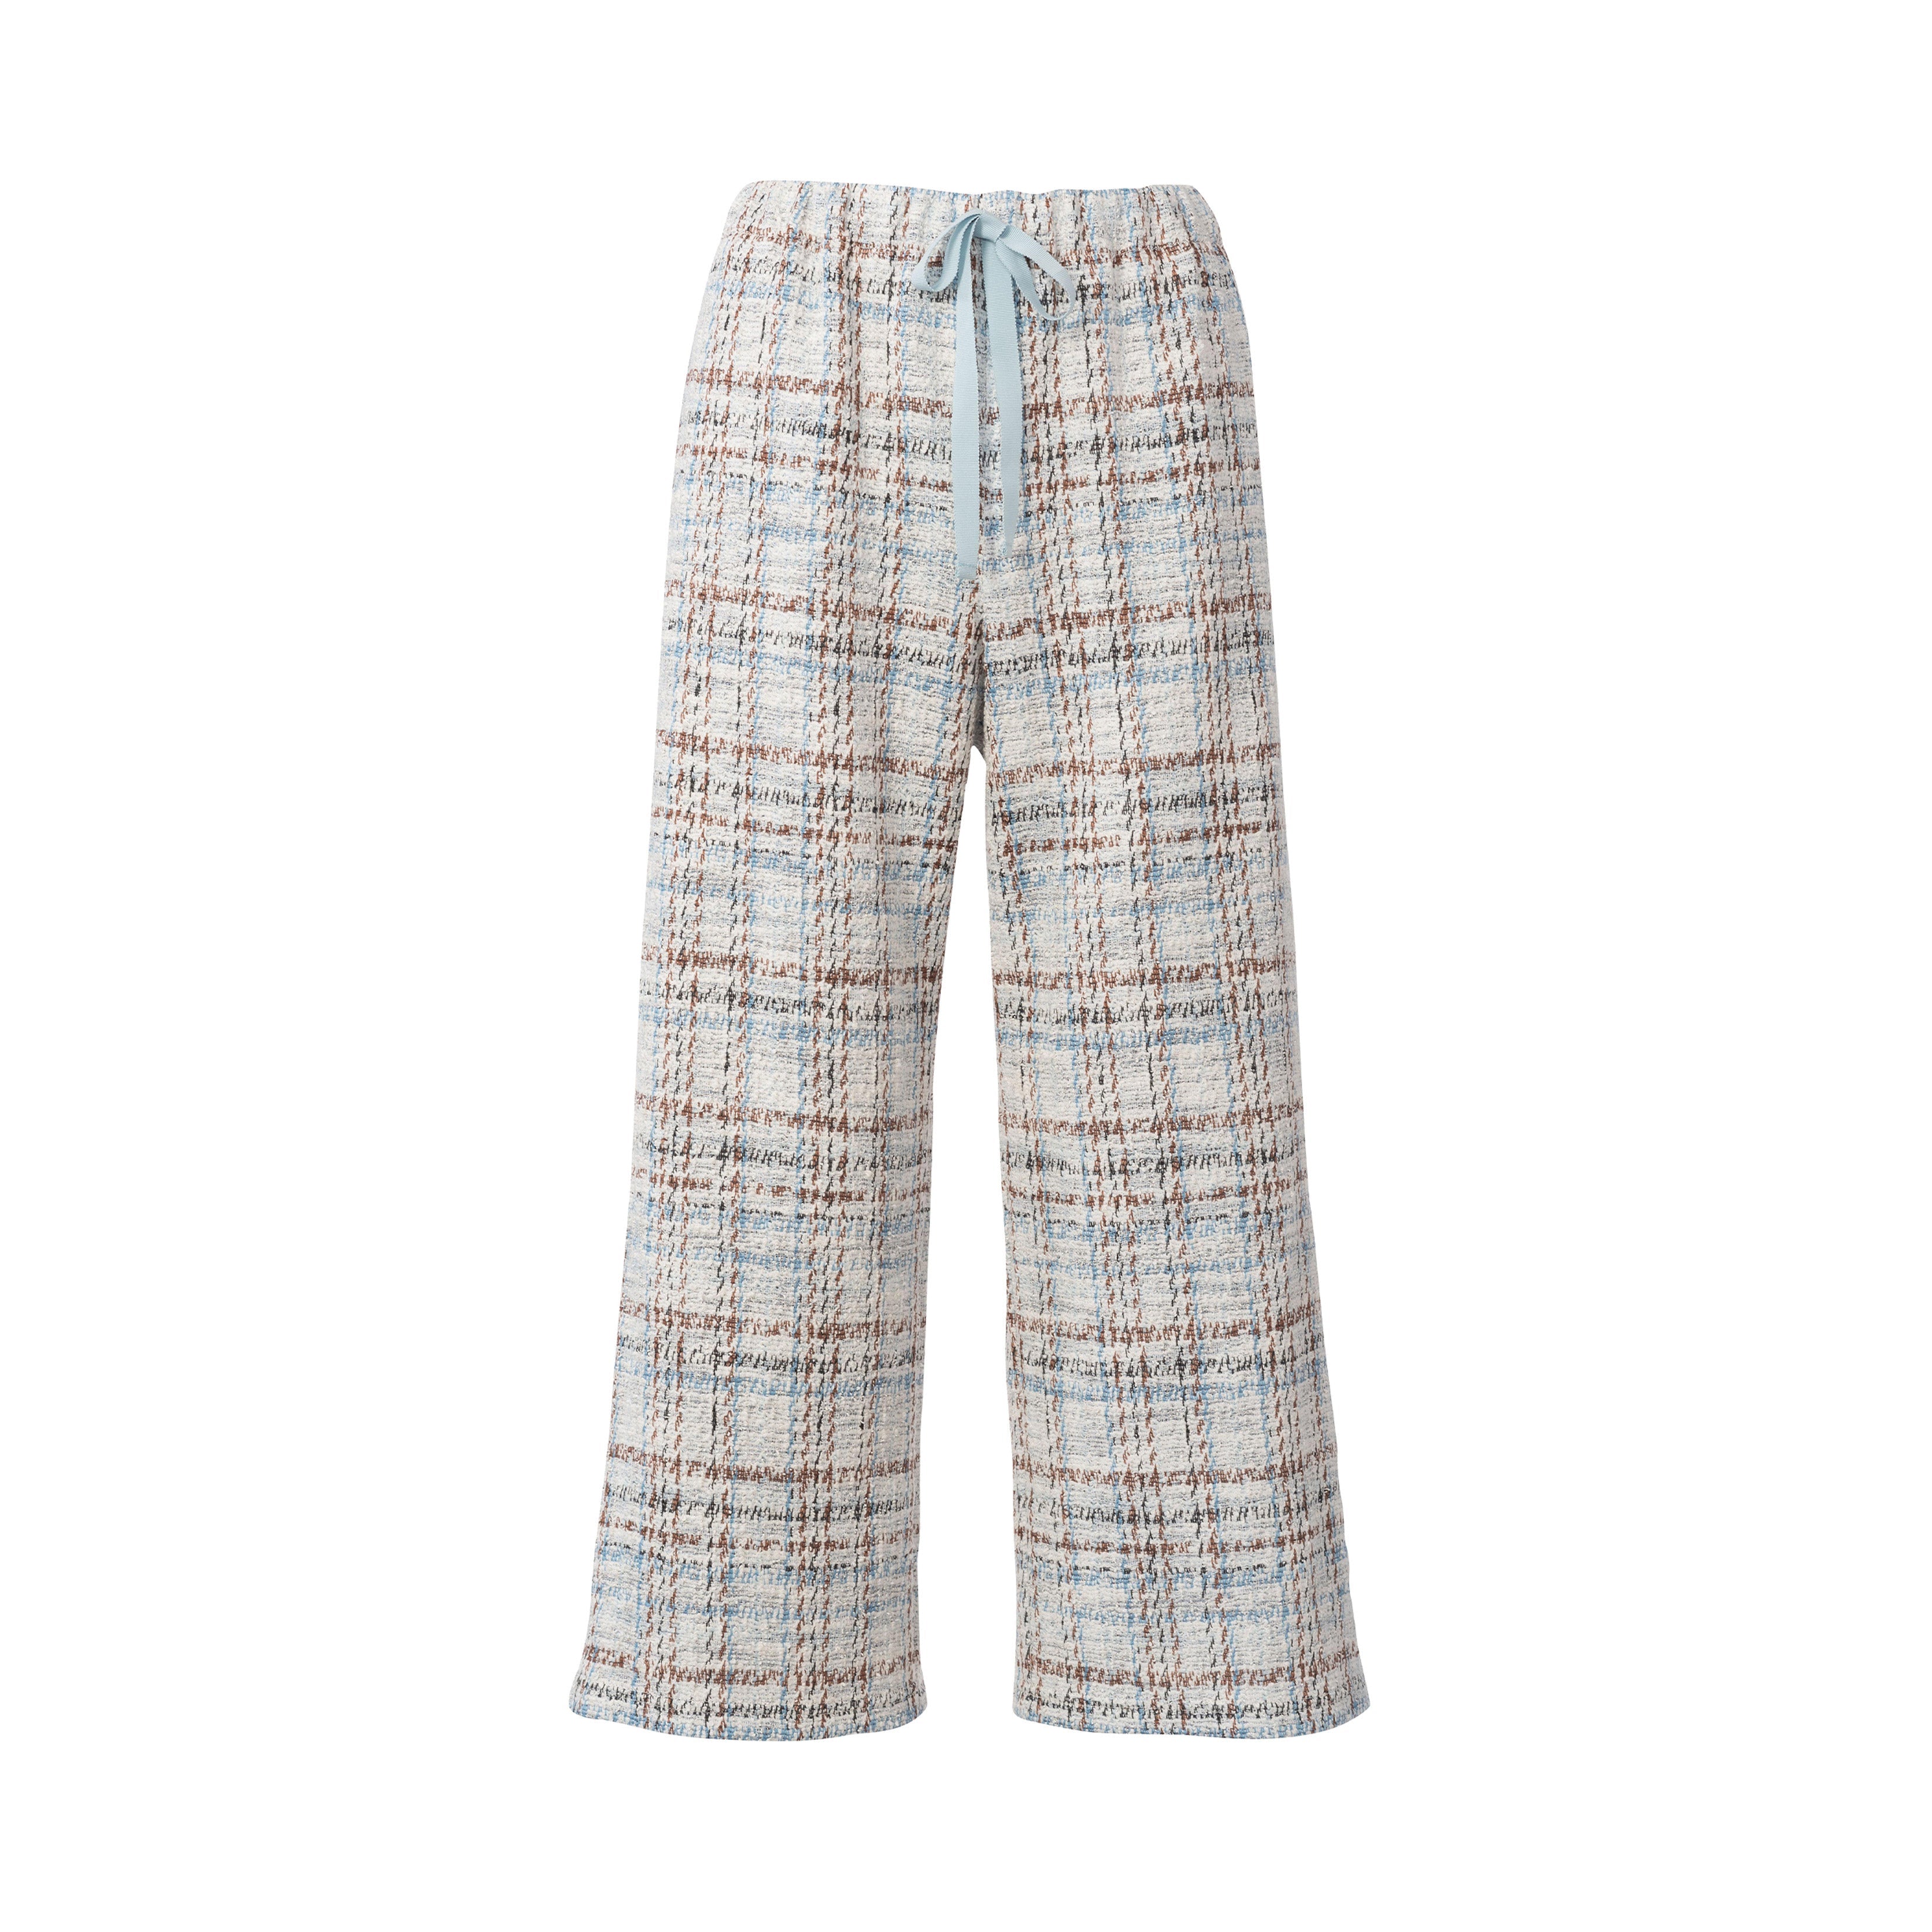 Burda Sewing Pattern 5960 Misses' Pants from Jaycotts Sewing Supplies